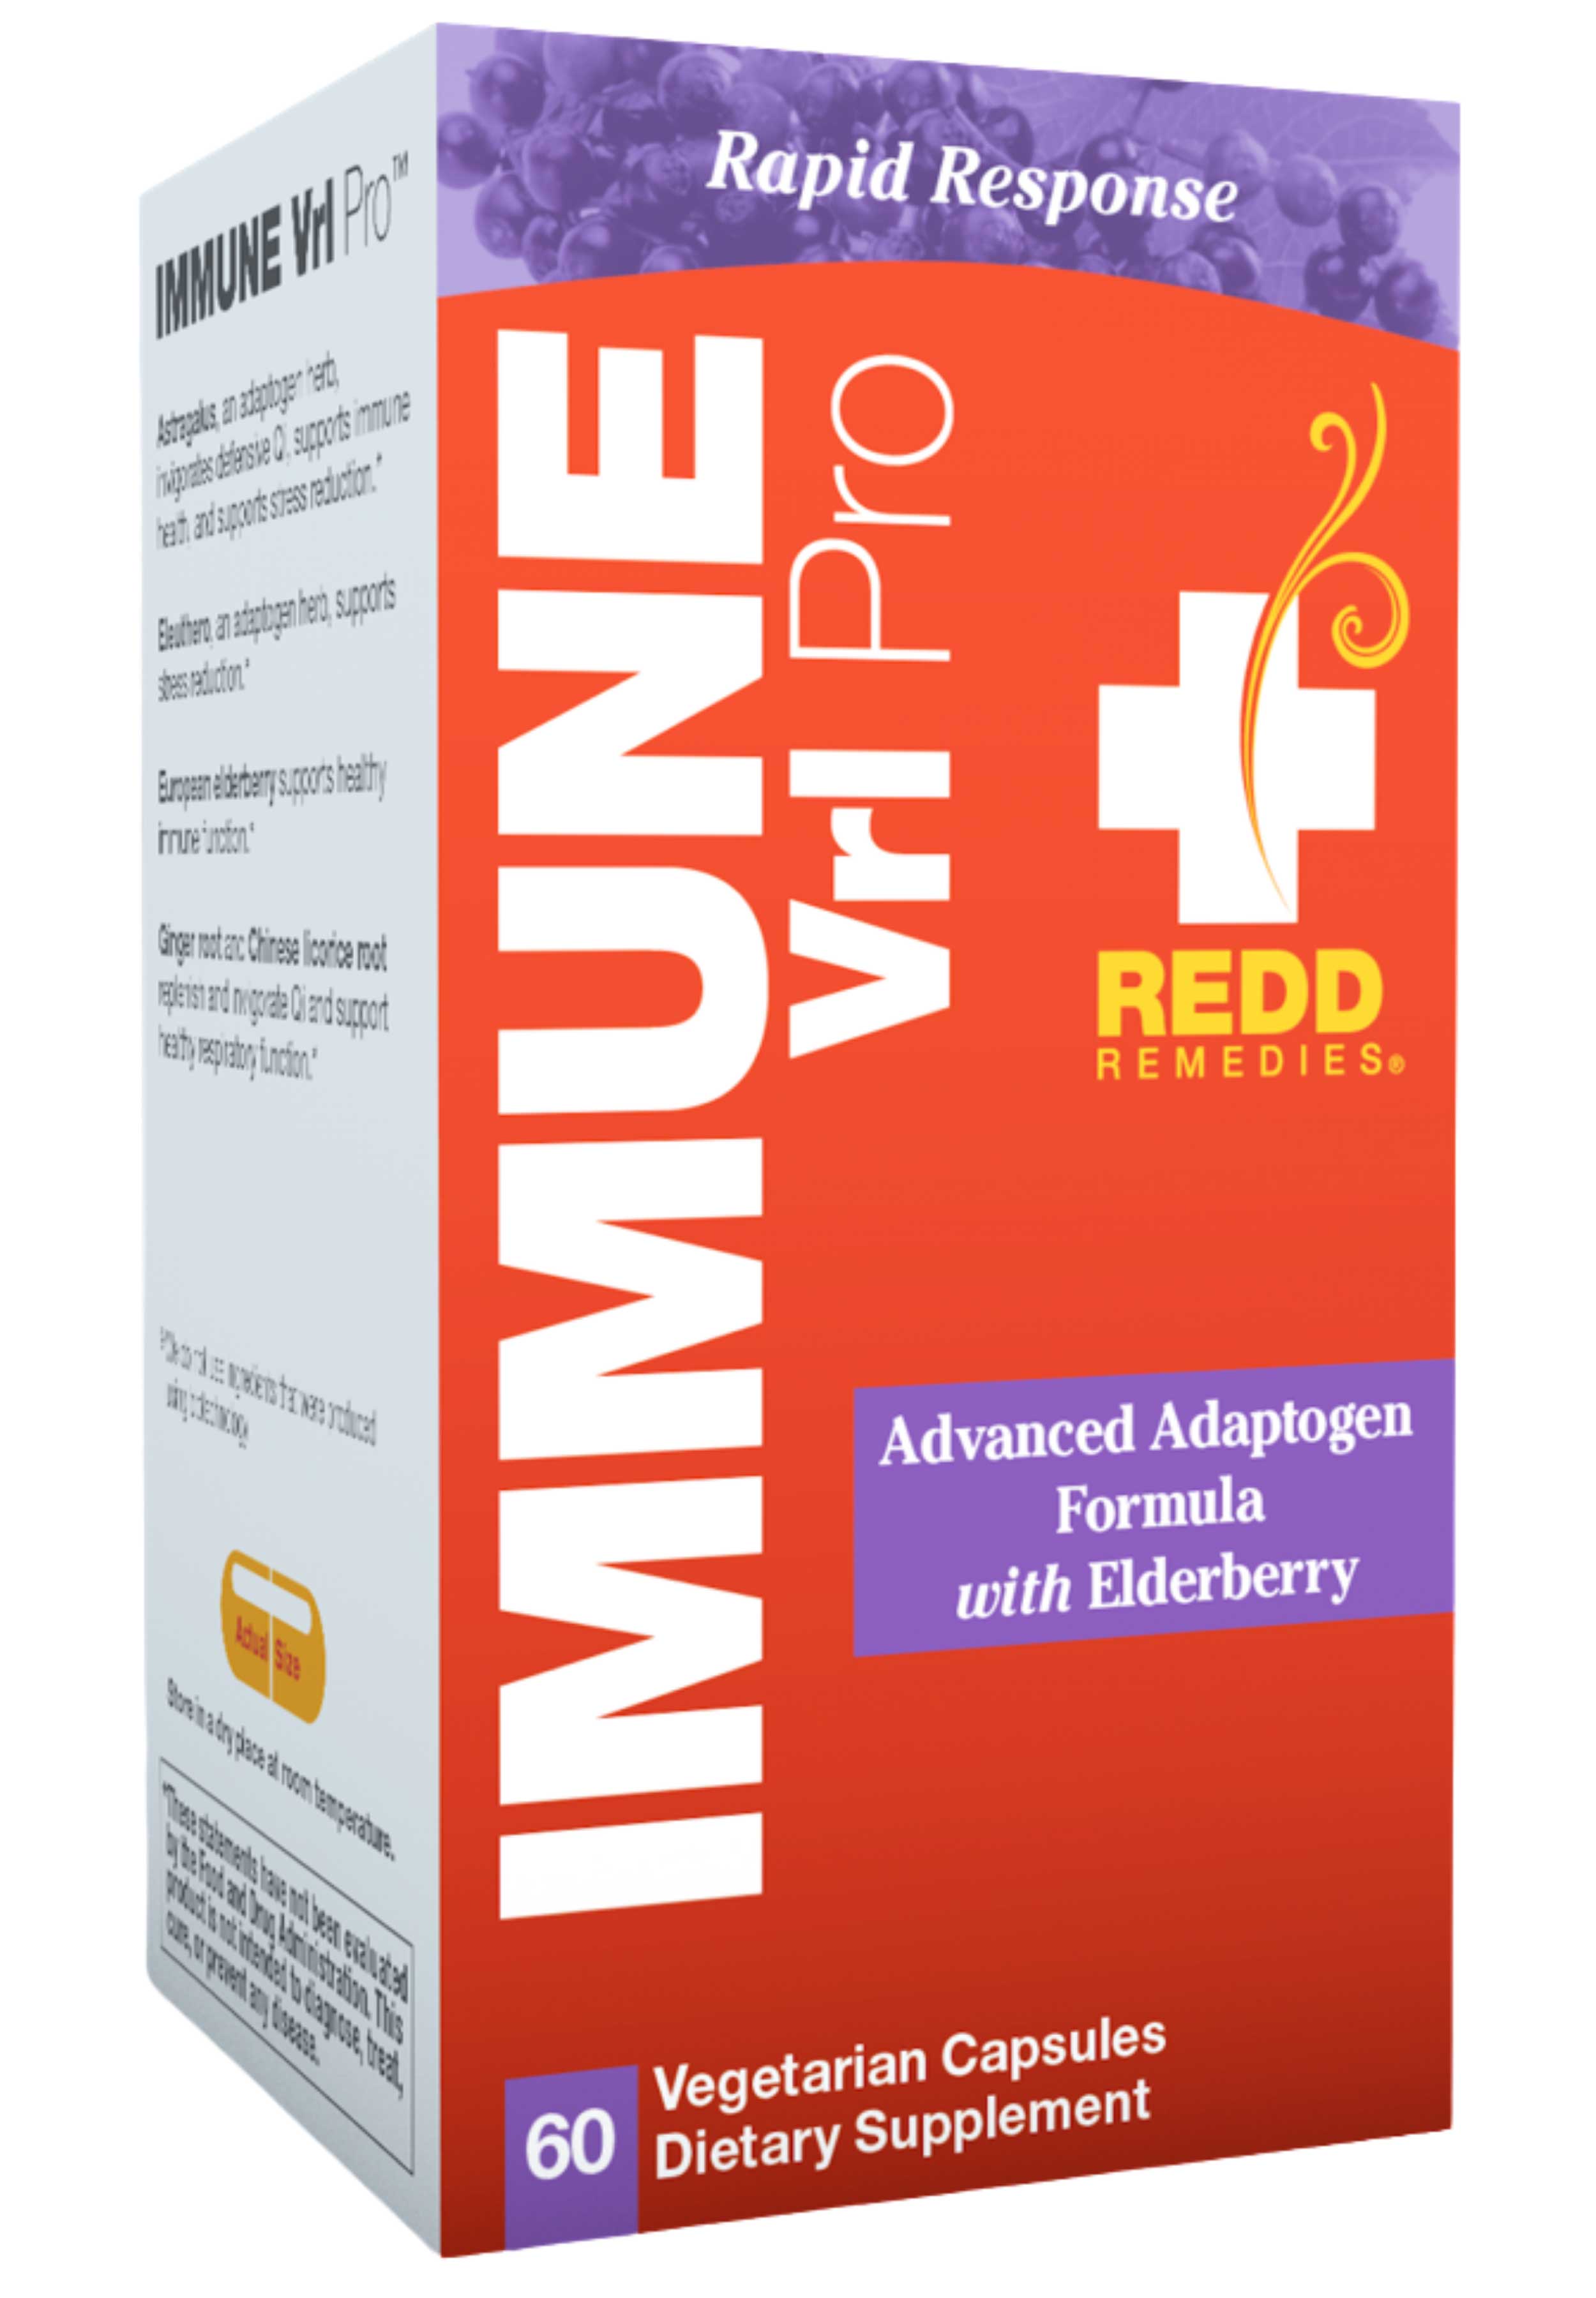 Redd Remedies Immune Vrl Pro